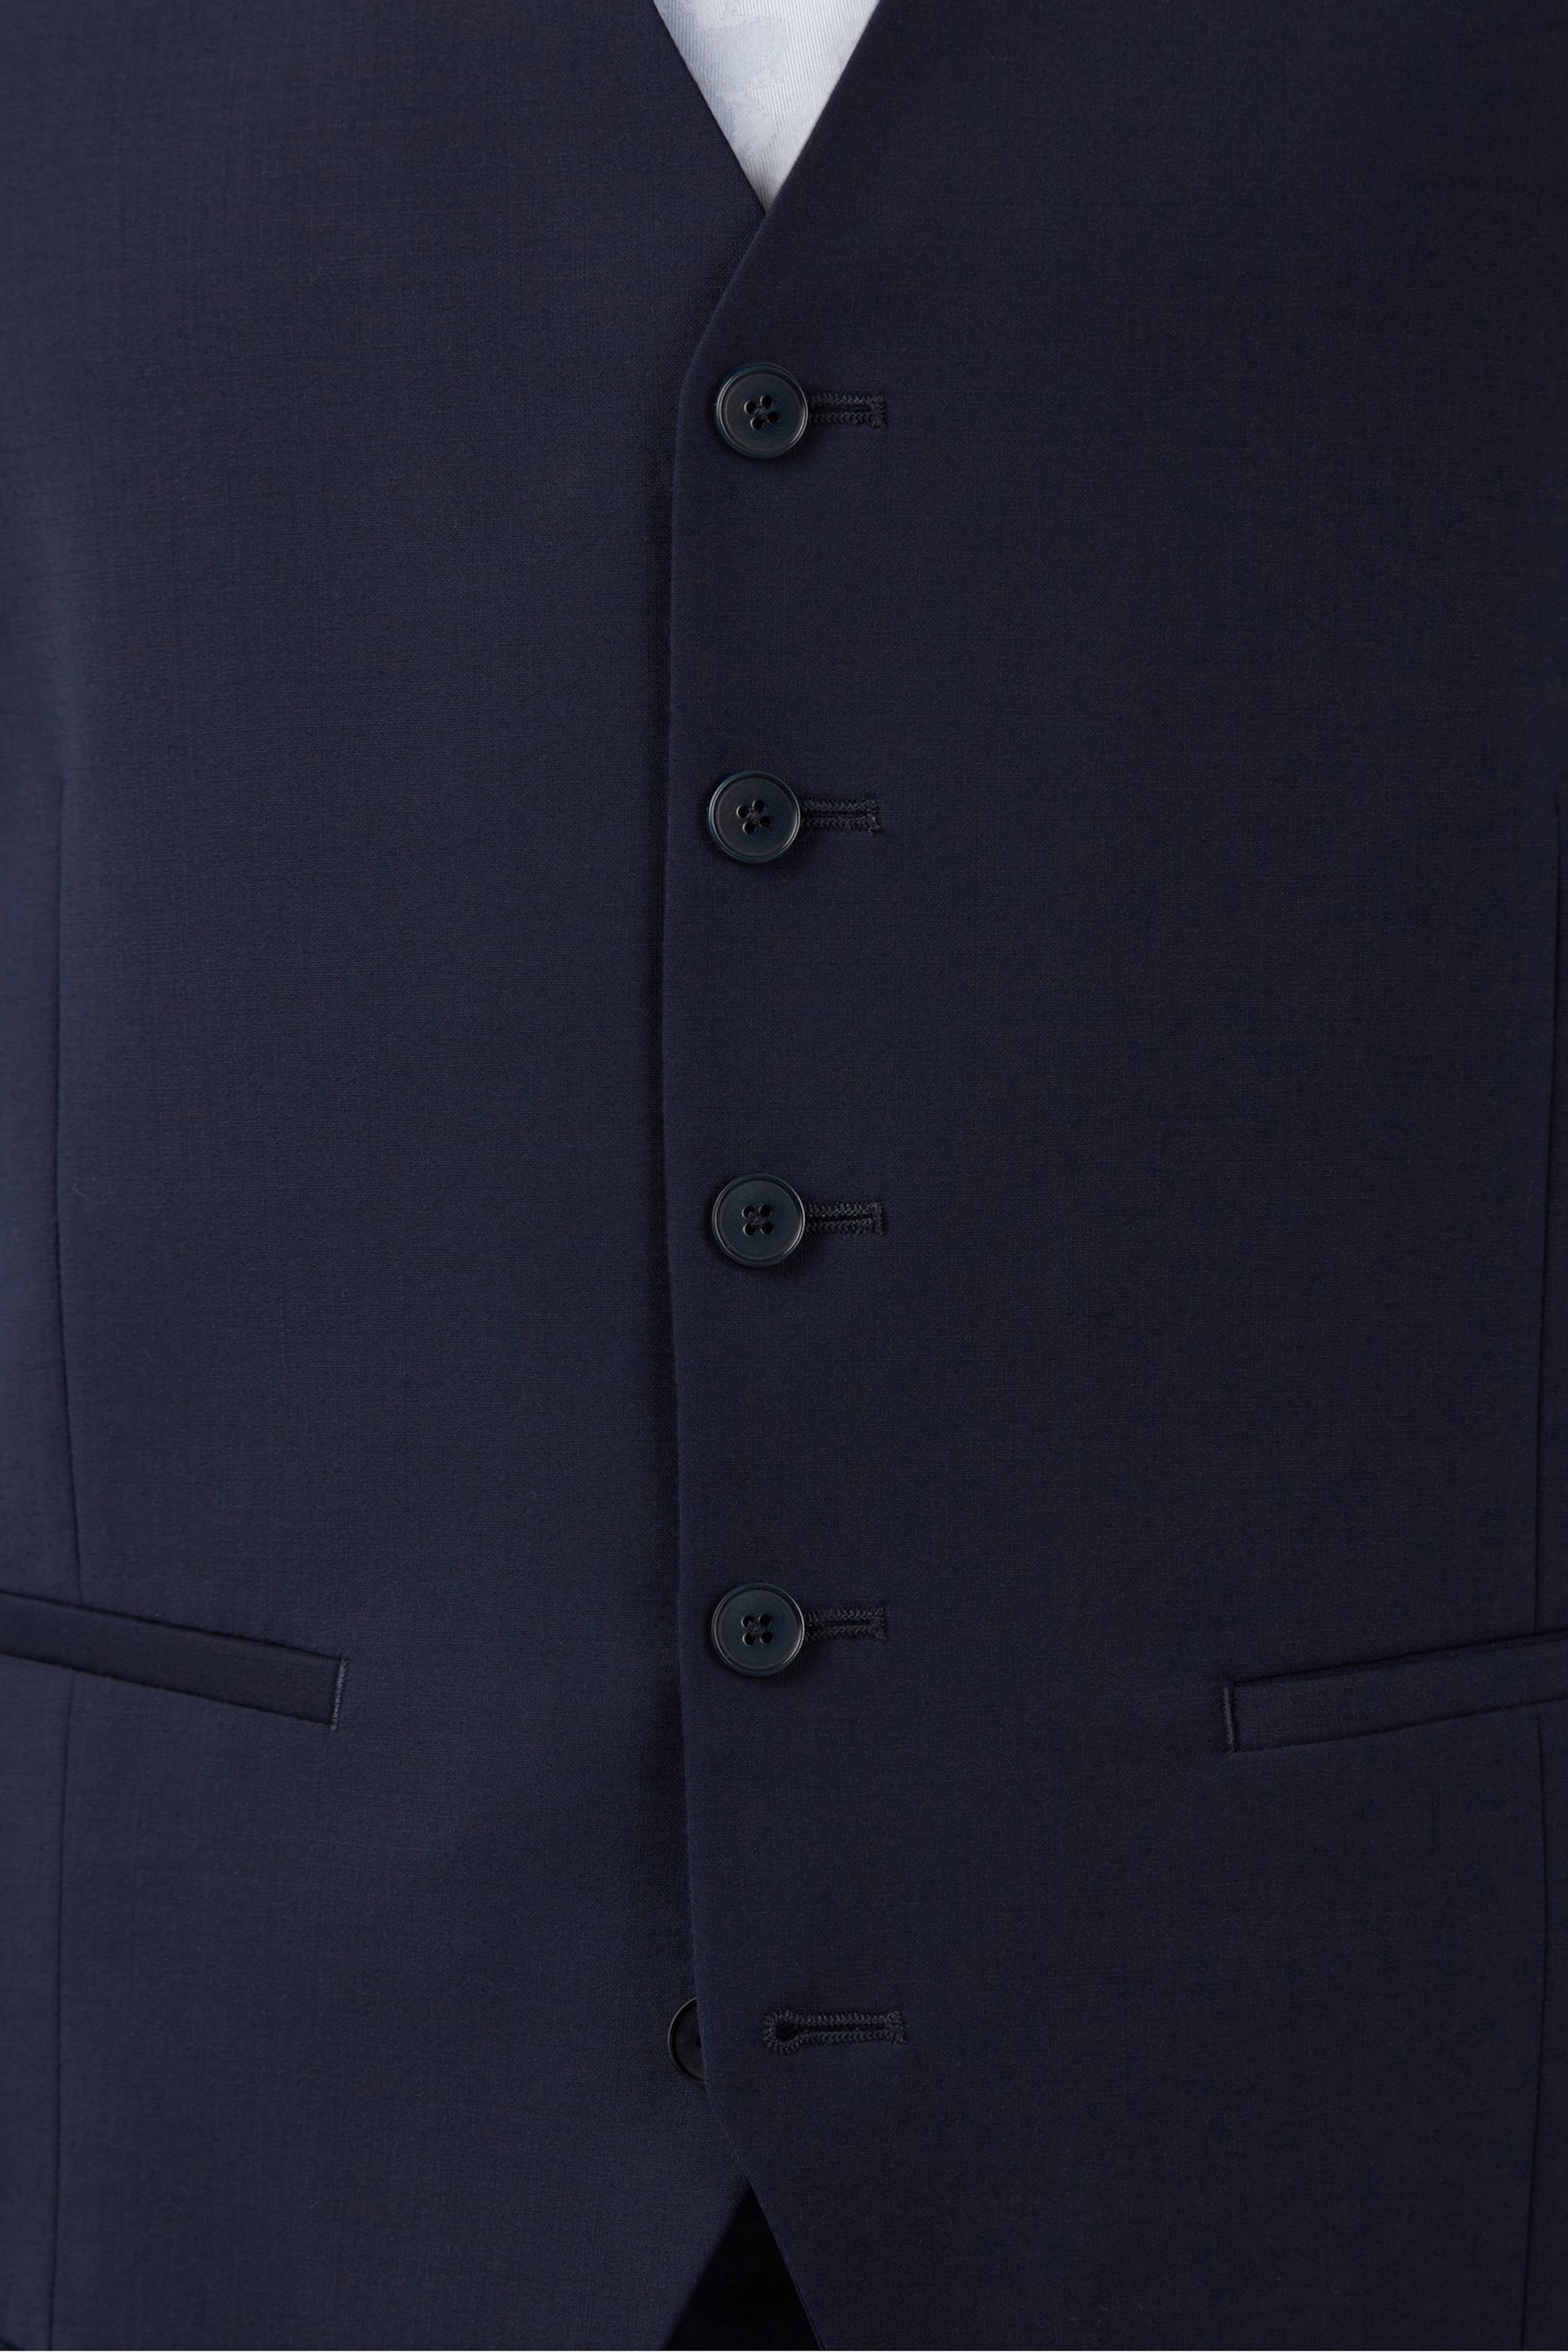 Ted Baker Navy Blue Premium Panama Suit Waistcoat - Image 3 of 4